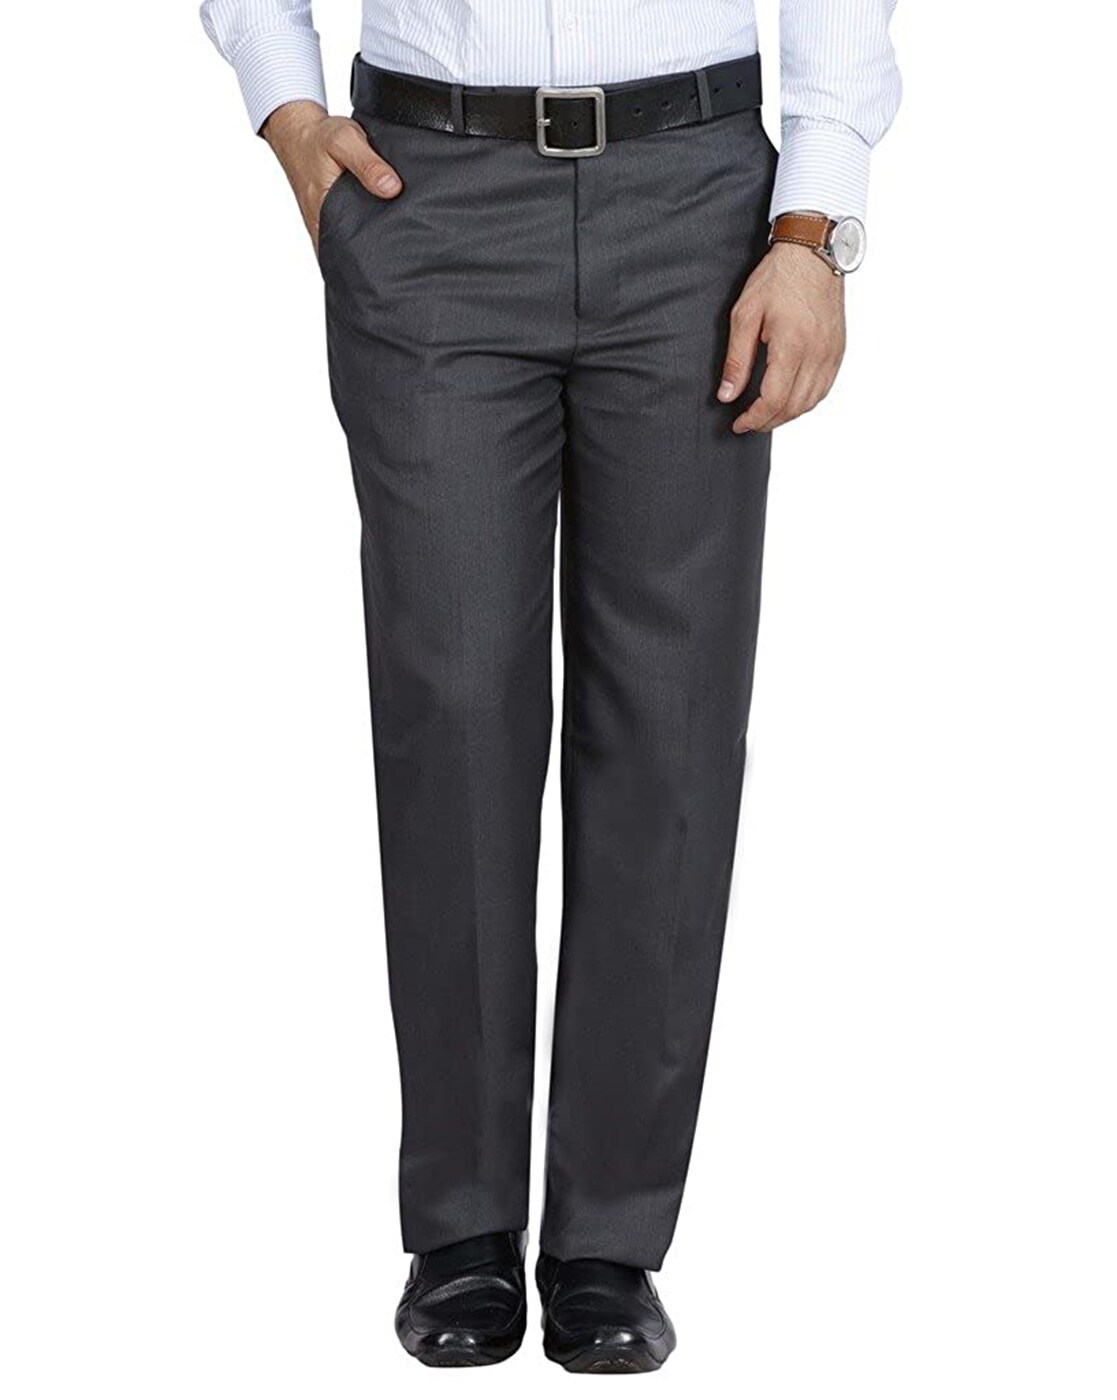 Buy Charcoal Grey Trousers  Pants for Men by SOJANYA Online  Ajiocom